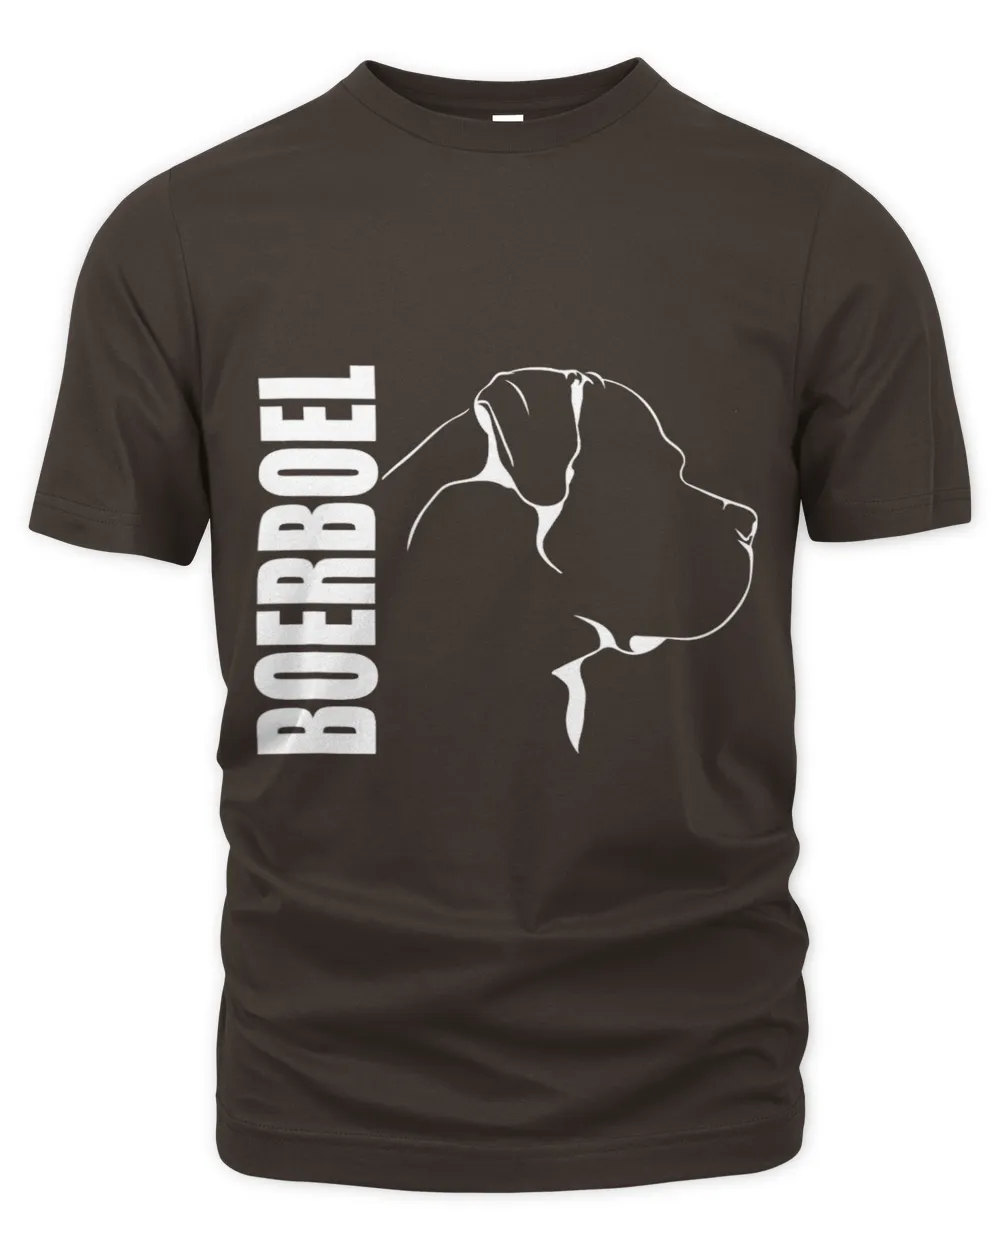 Proud Boerboel profile dog breed dog 14